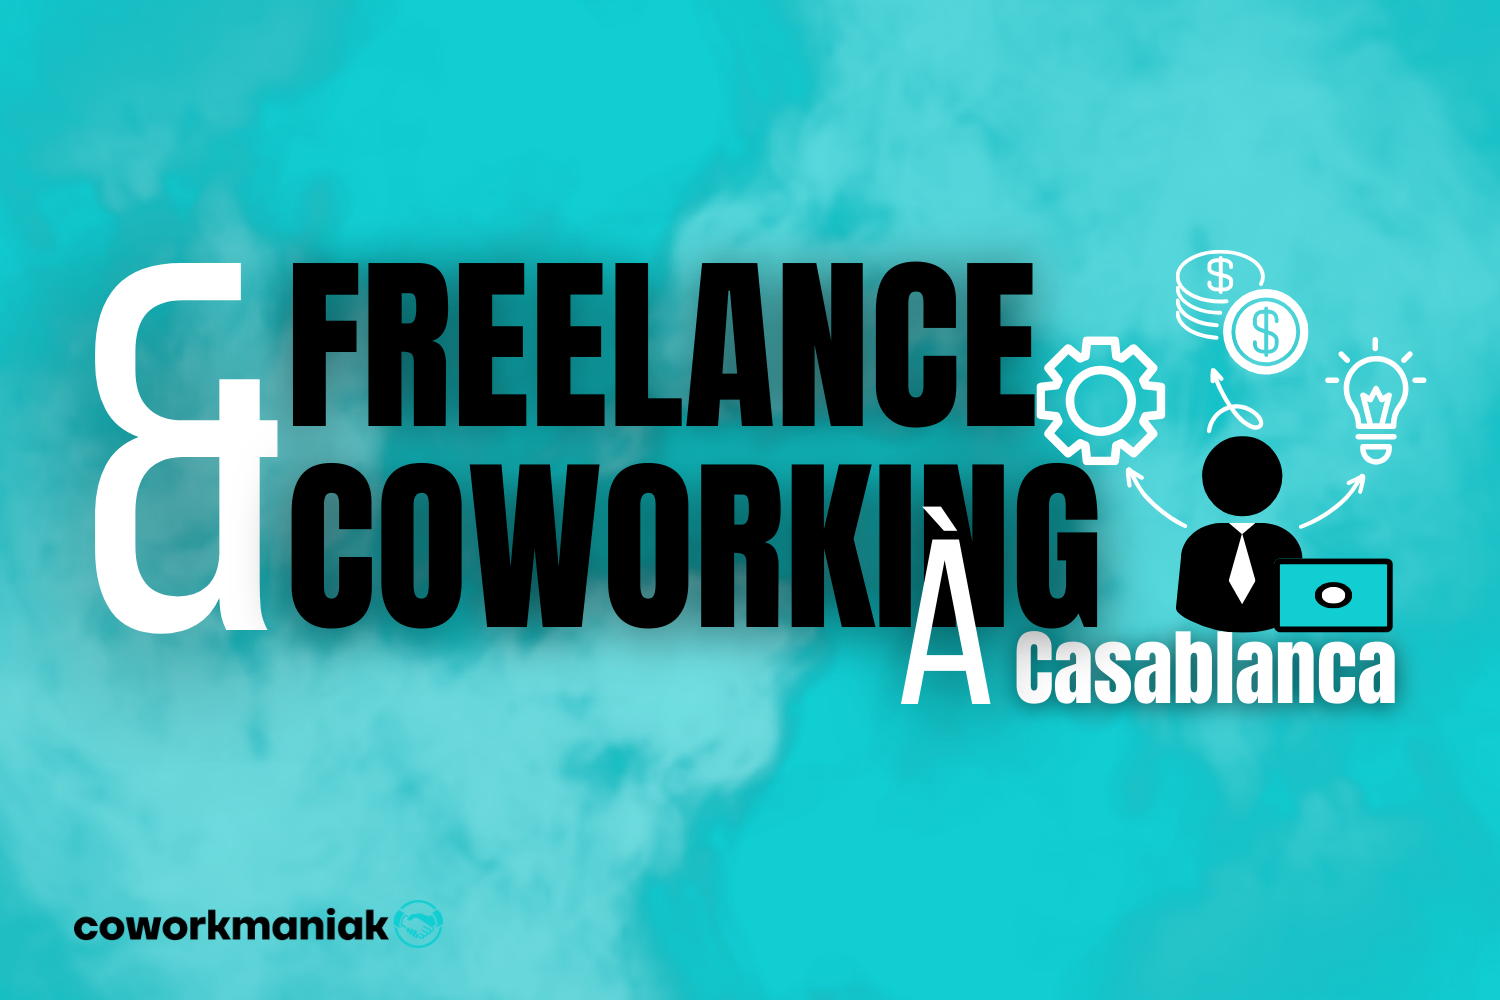 freelance et coworking